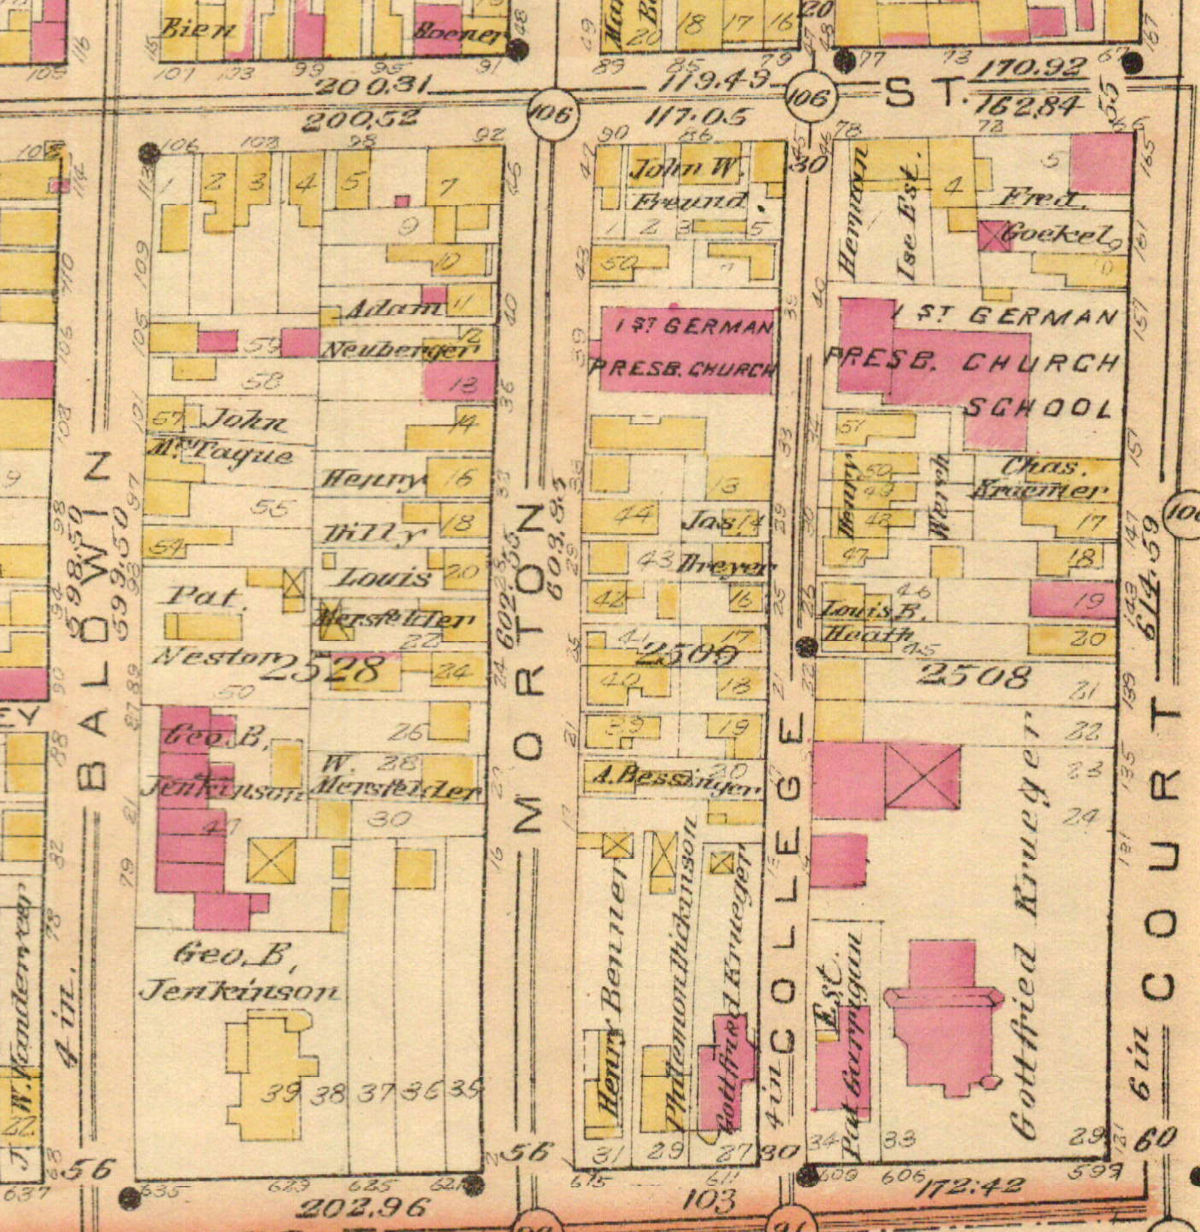 1889 Map
39 Morton Street n. High Street
